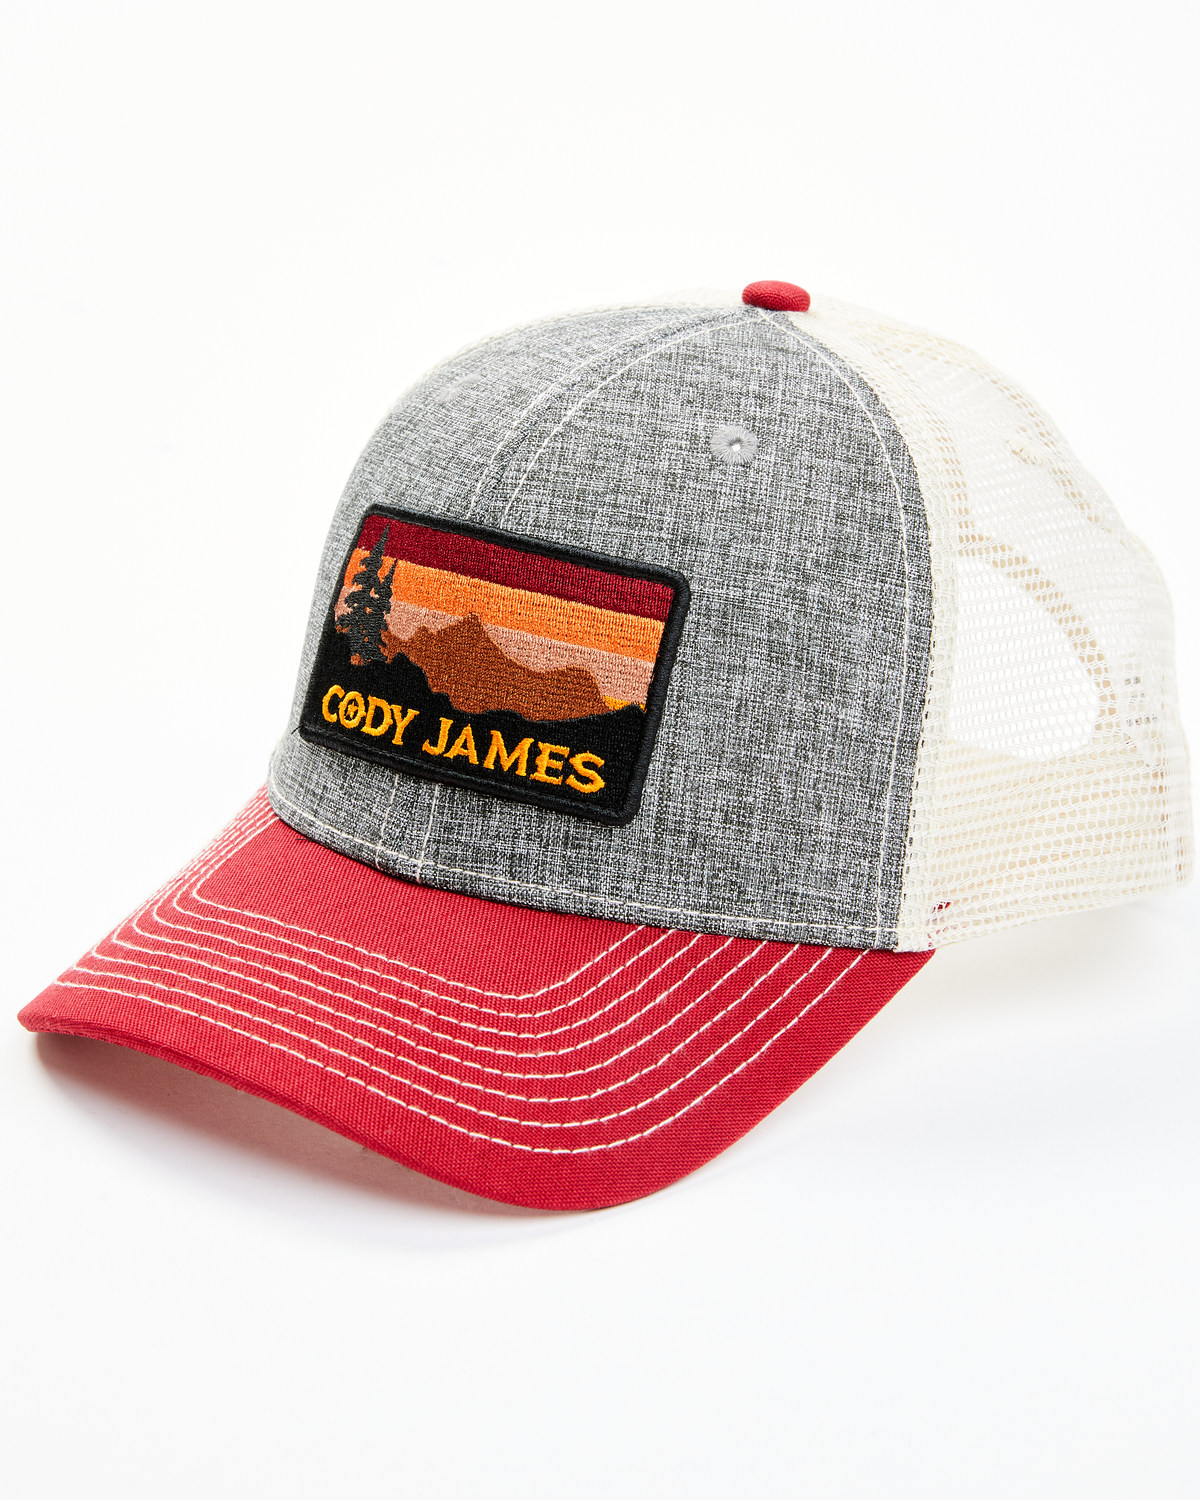 Cody James Men's Sunset Logo Patch Ball Cap